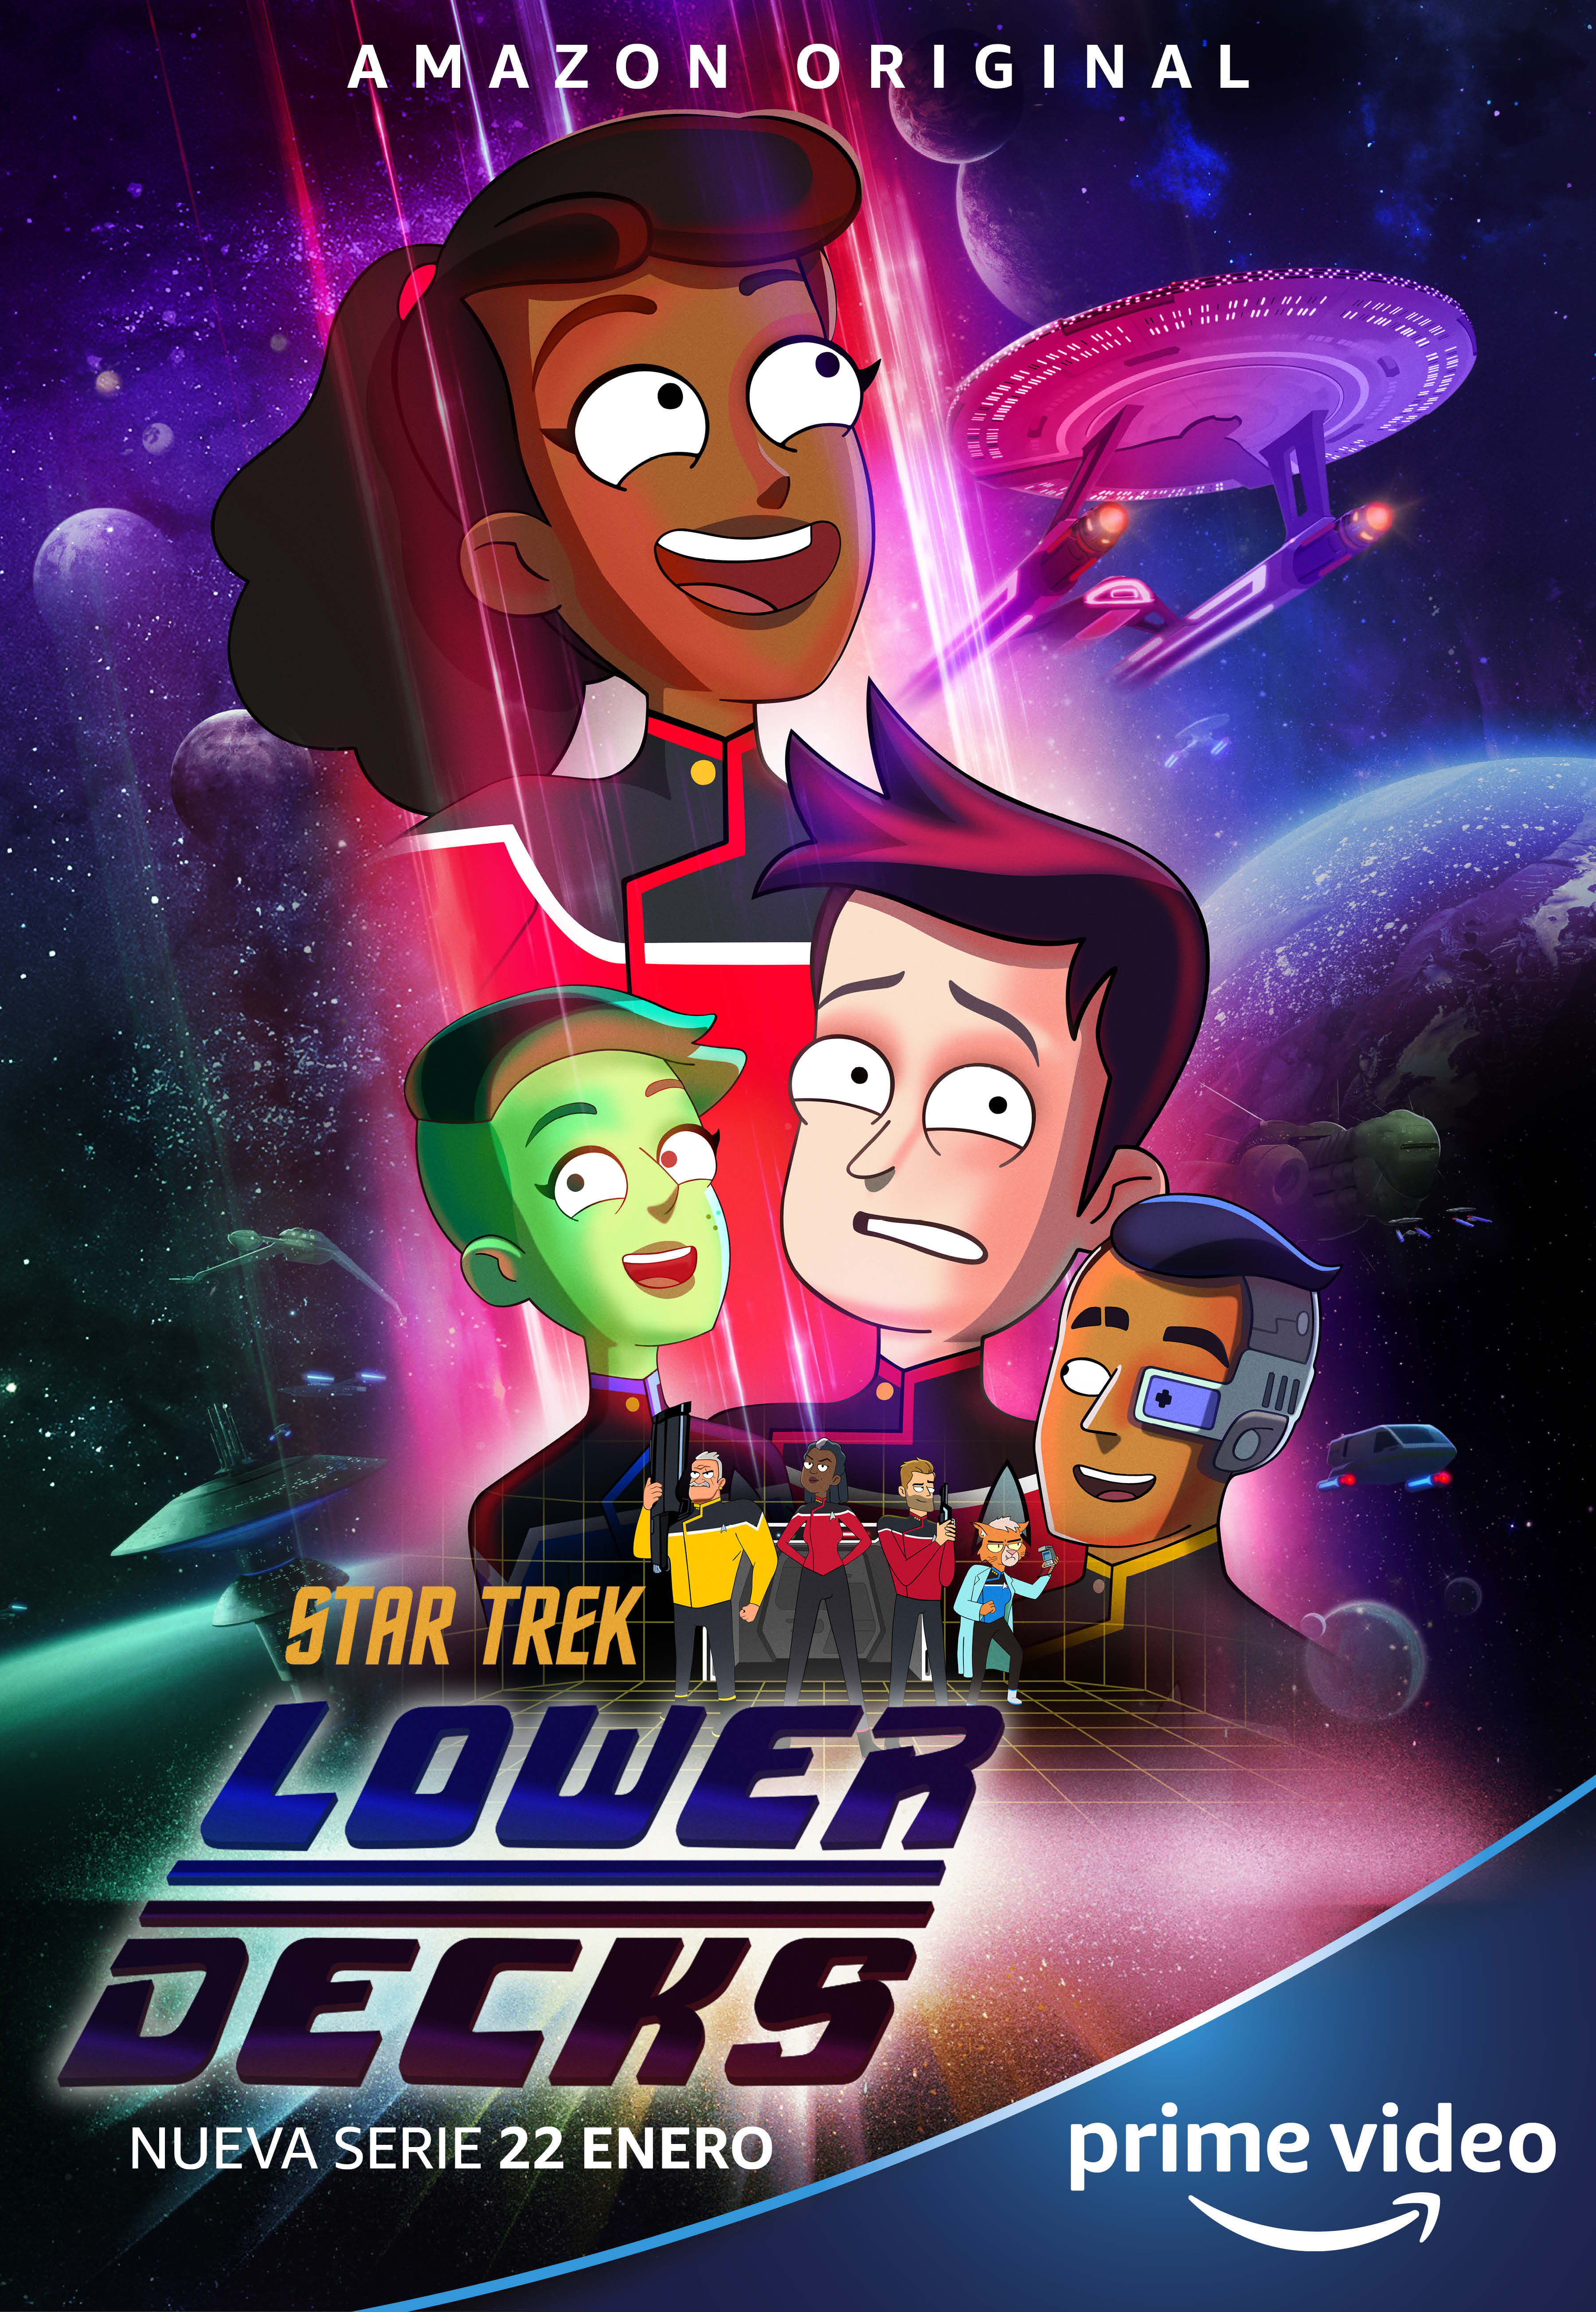 Star Trek: Lower Decks (TV Series 2020– )